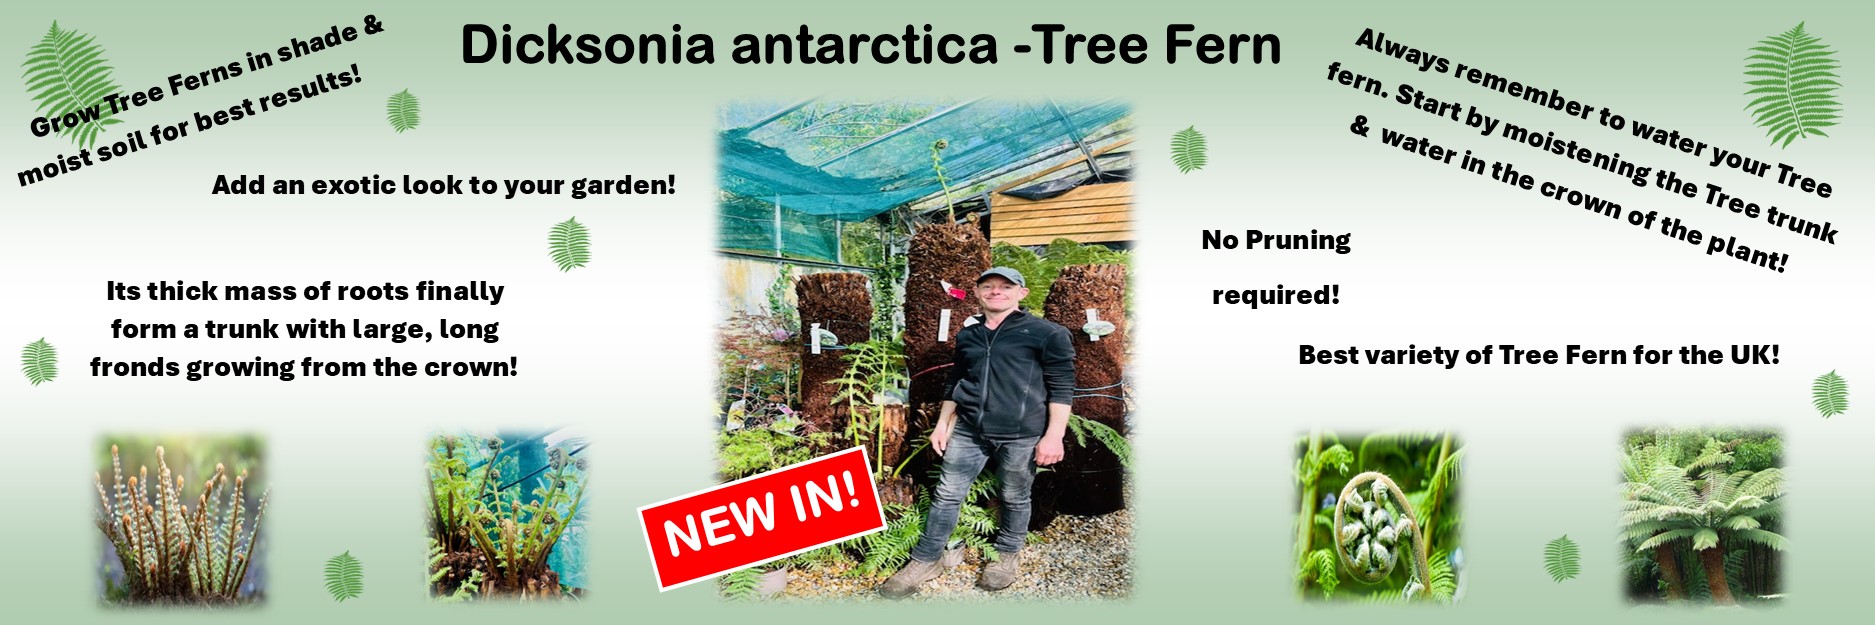 Dicksonia antarctica -Tree Fern 